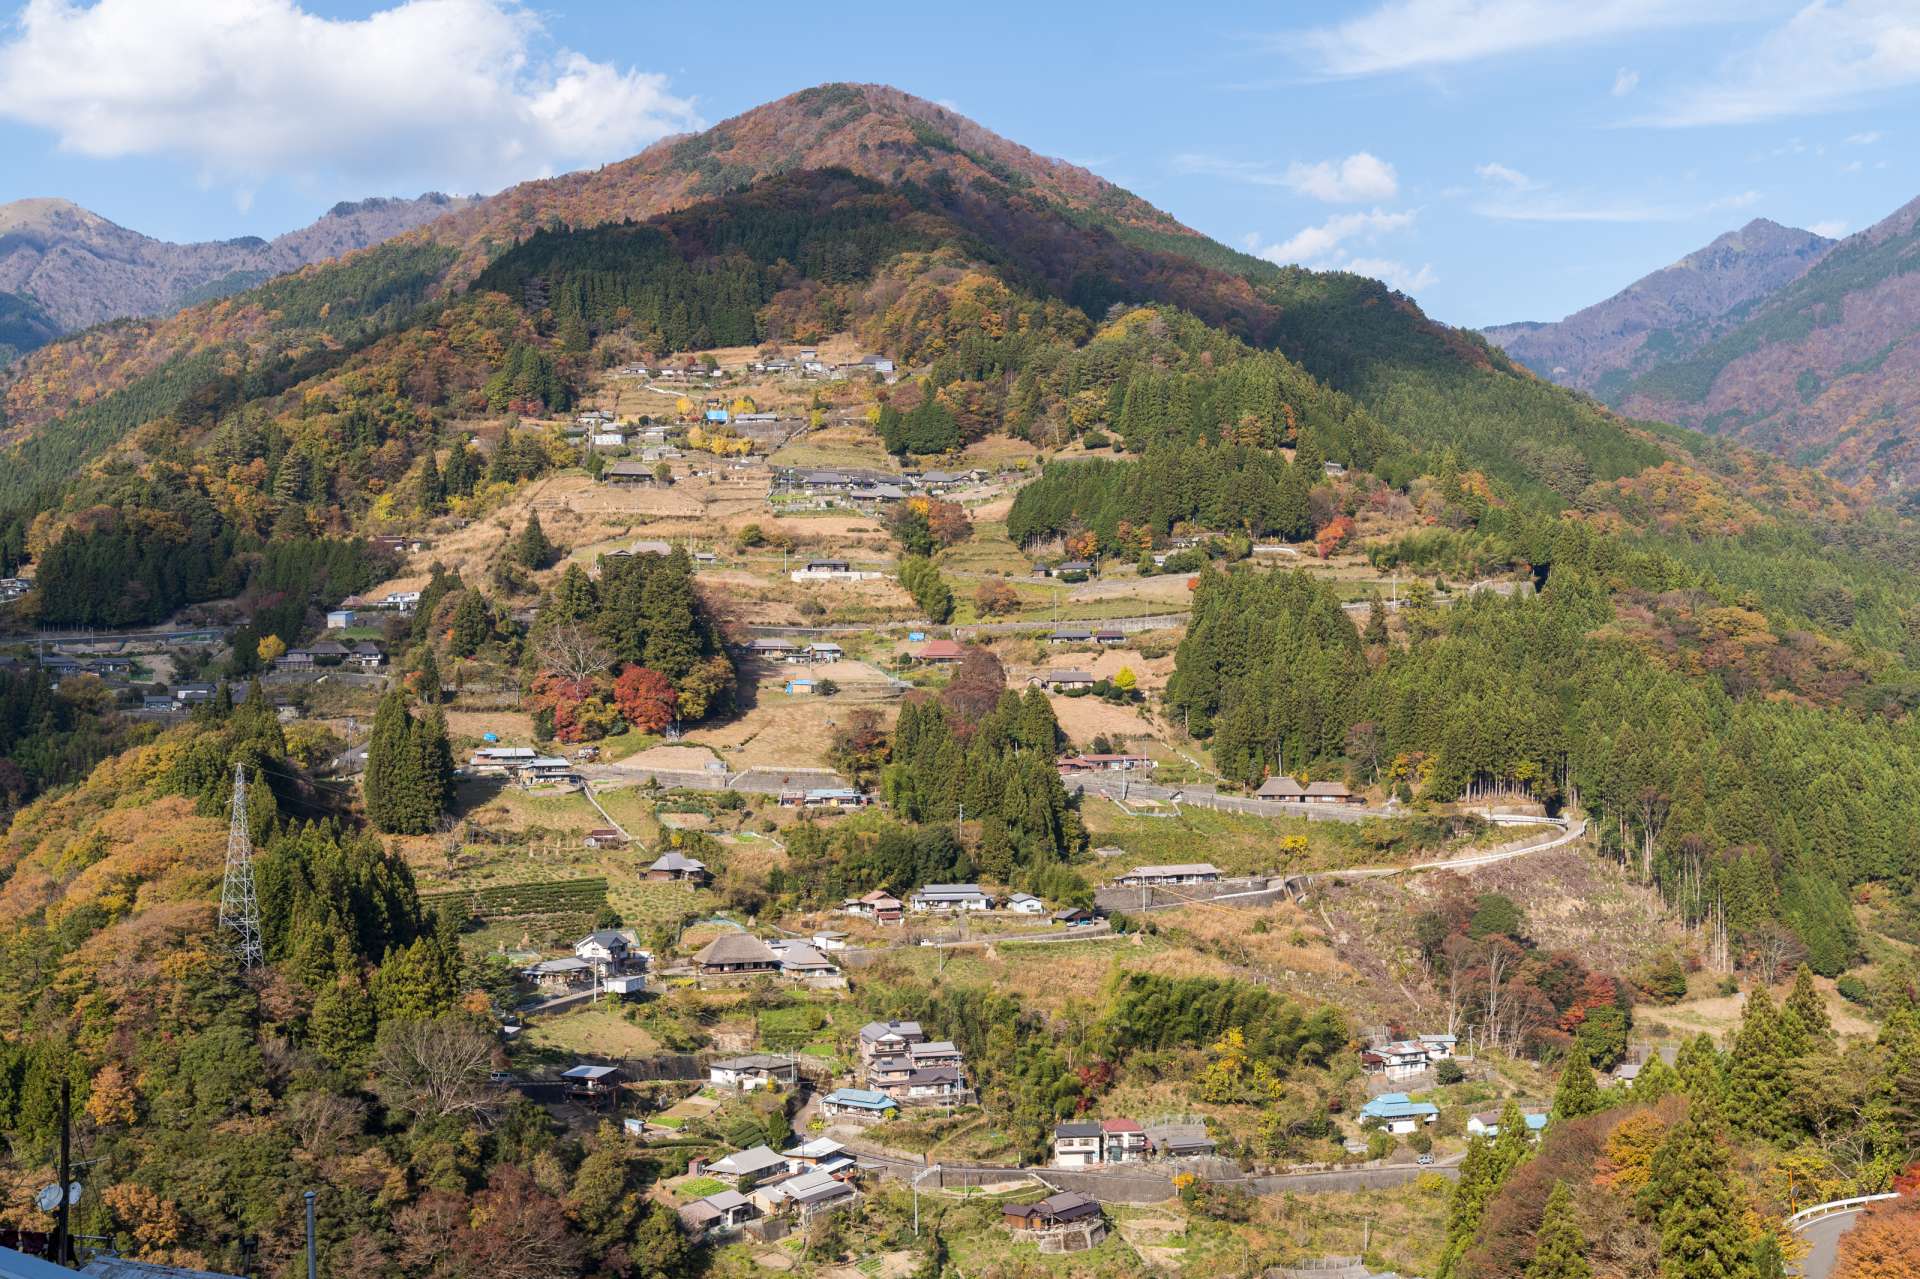 Ochiai Hamlet viewed from the observatory. The tranquil mountain village atmosphere evokes feelings of wanderlust.